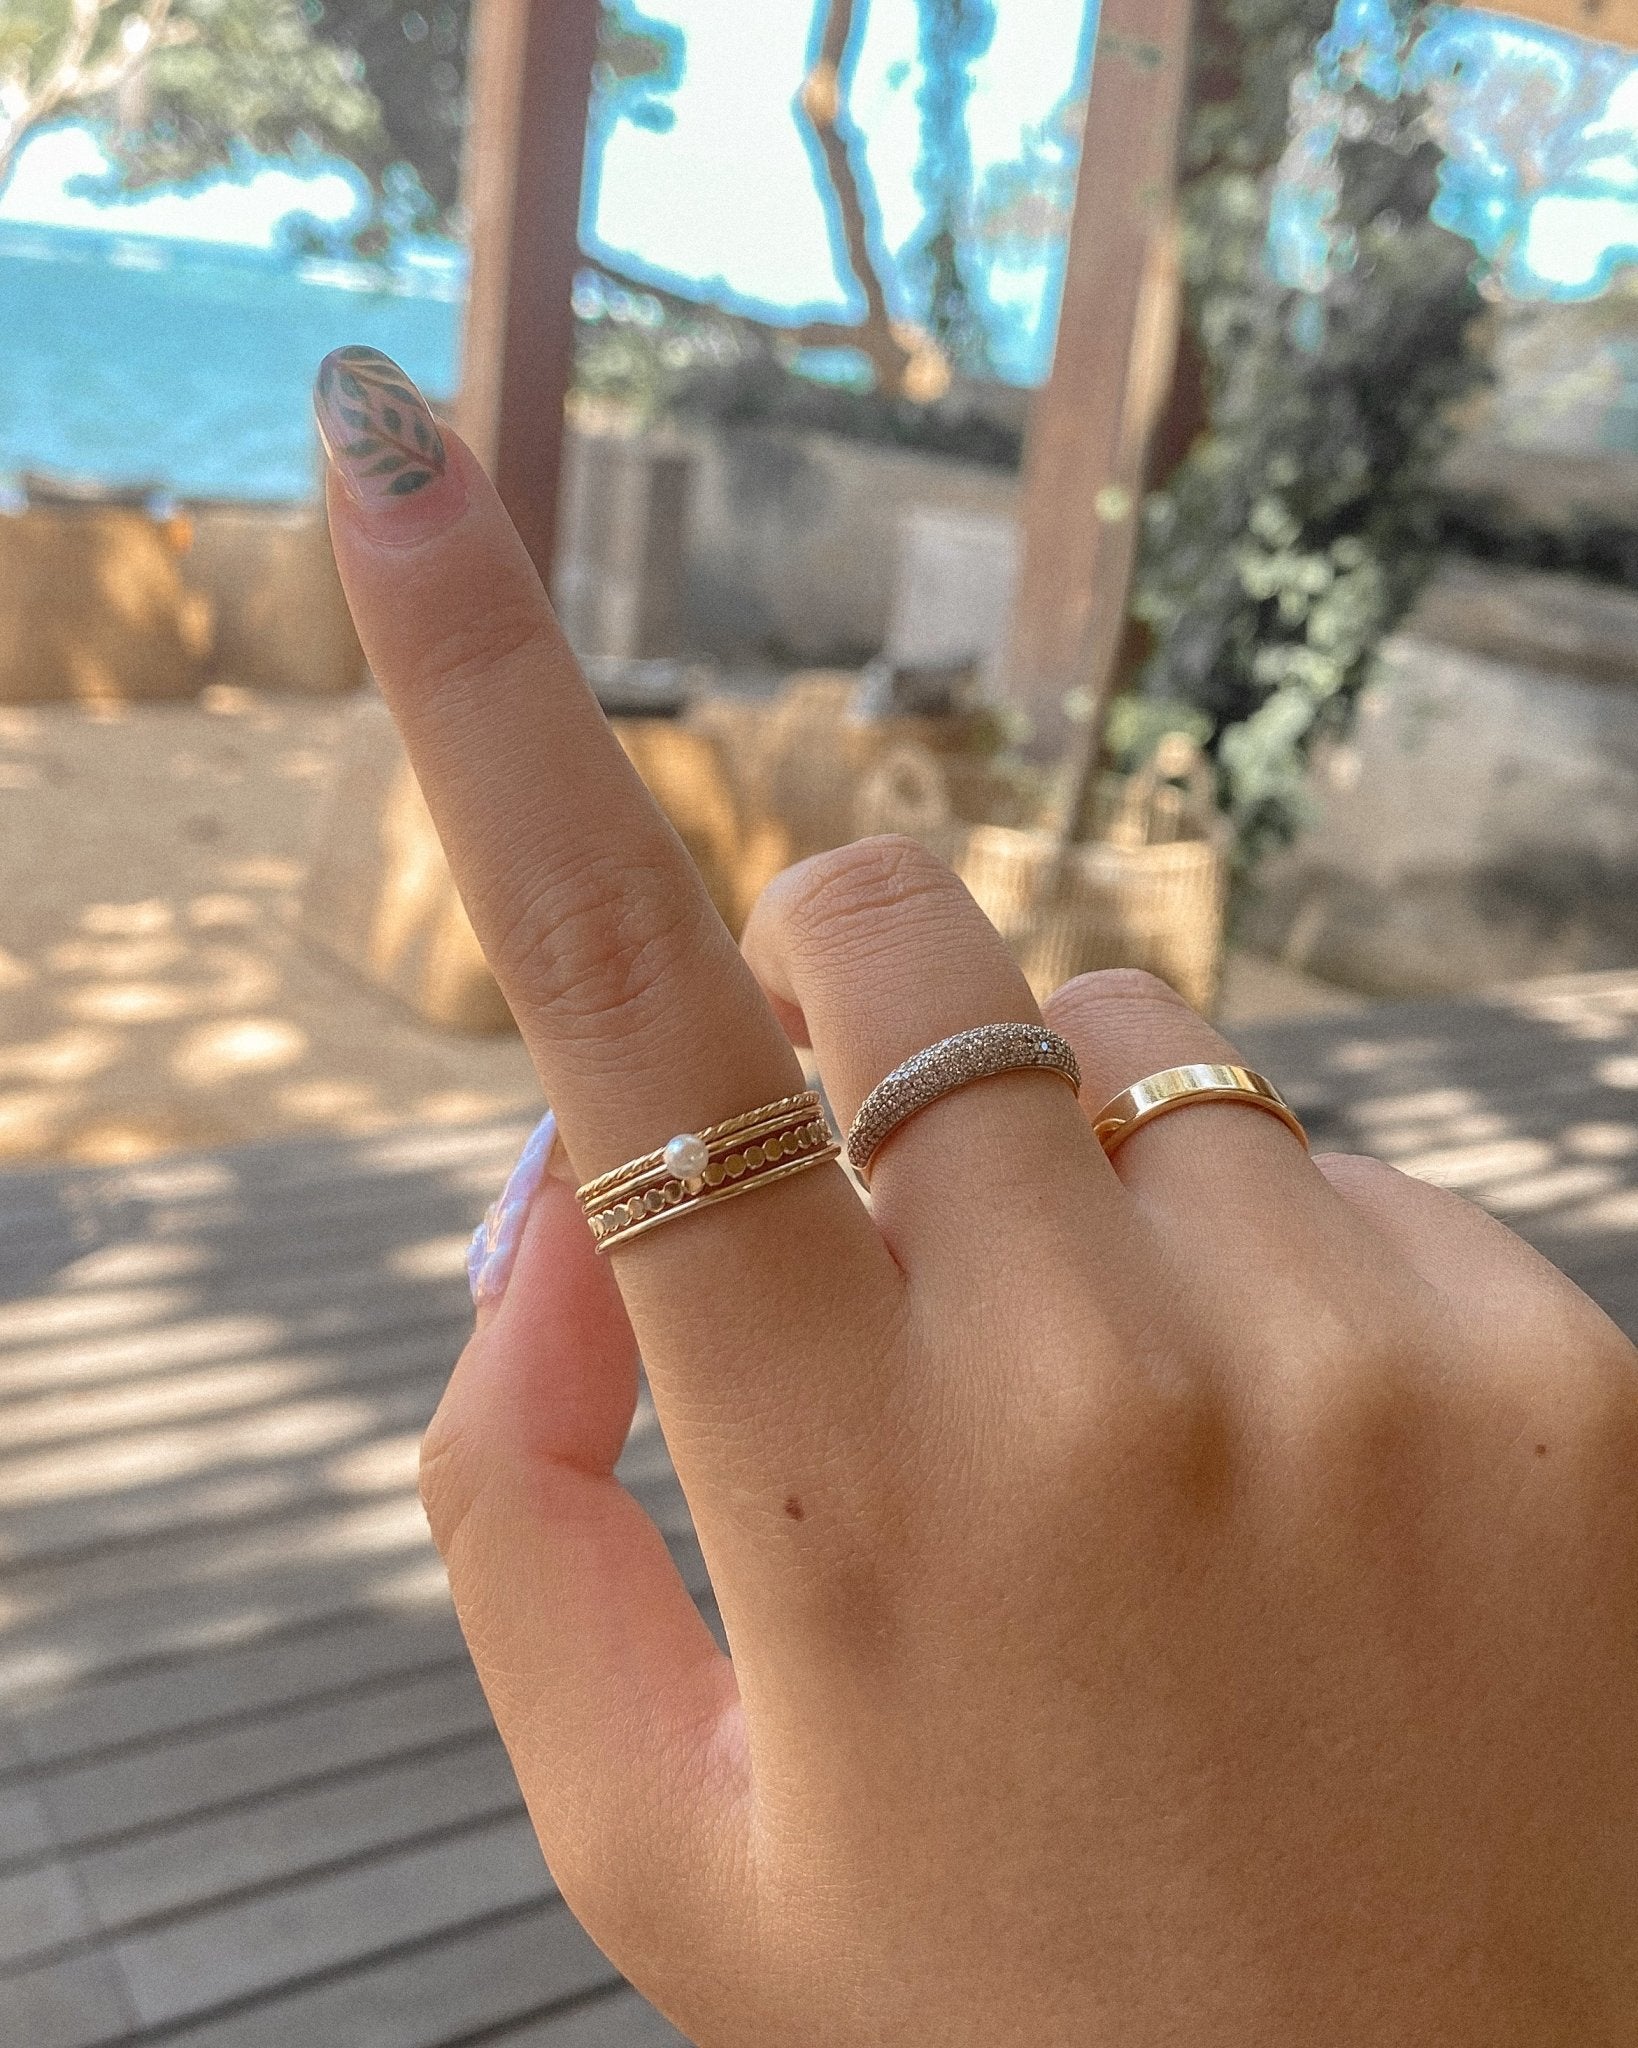 Get Golden Nail Shaped Finger Ring at ₹ 399 | LBB Shop